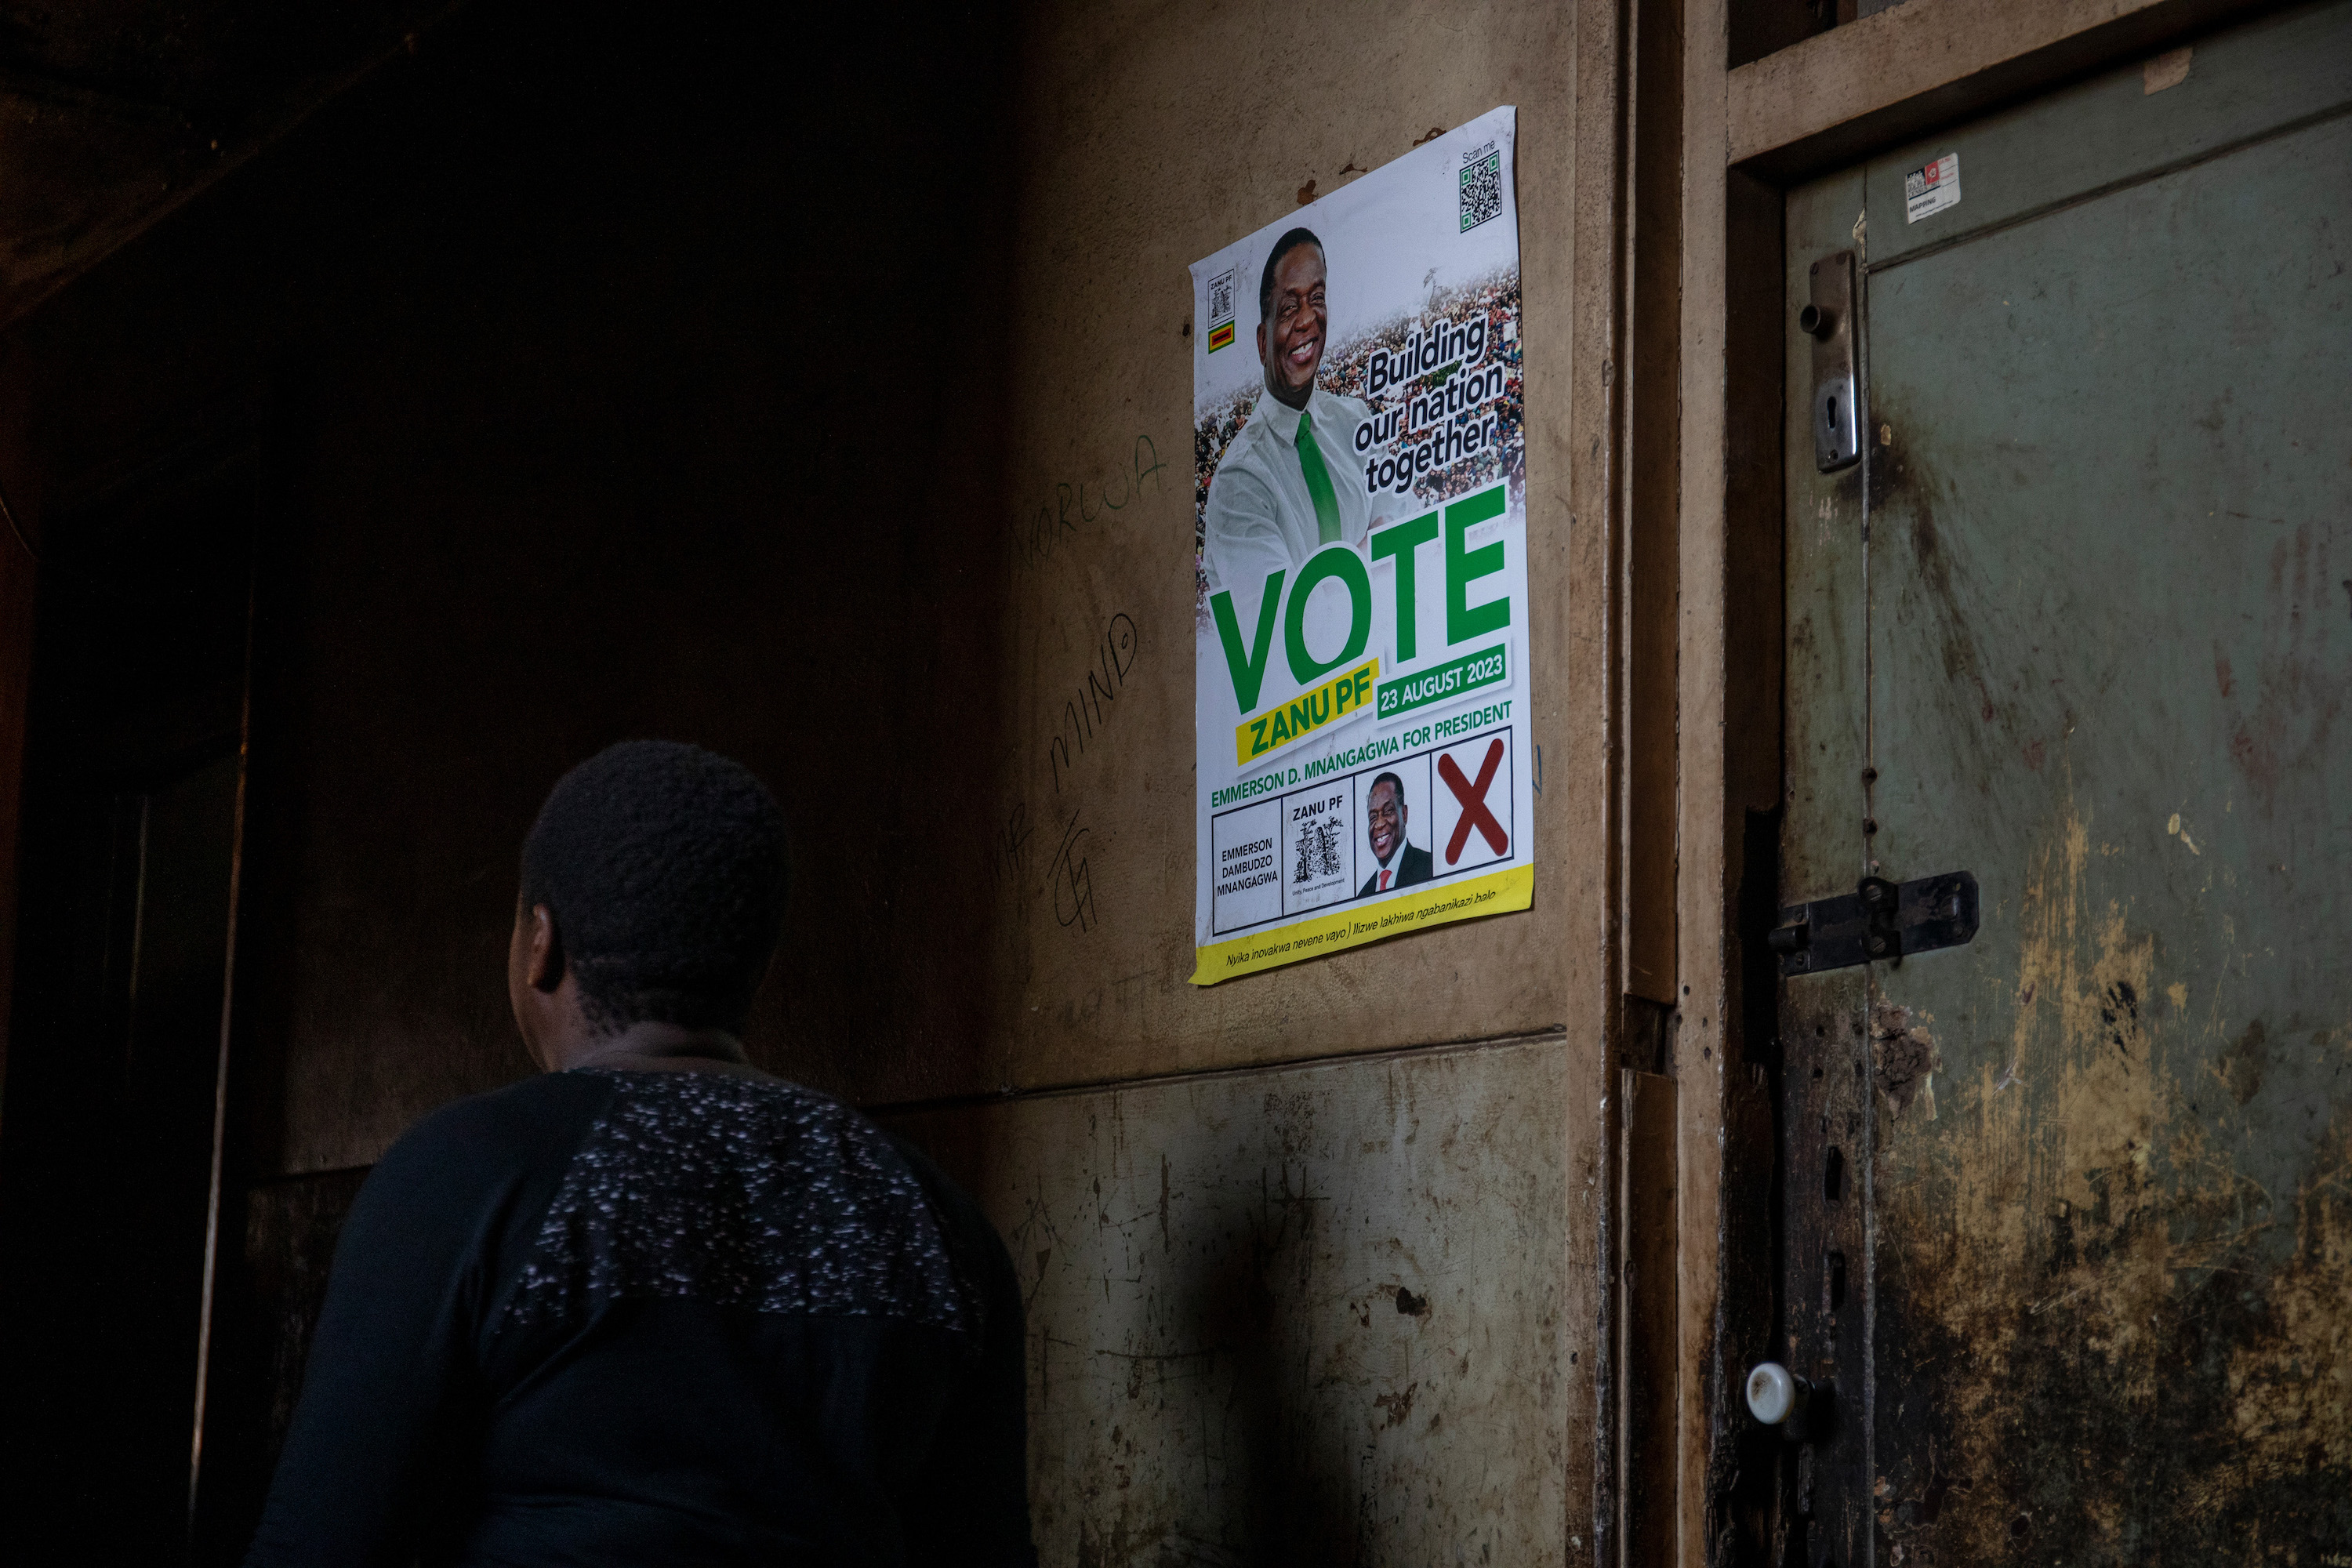 election poster for Emmerson Mnangagwa, Zimbabwe